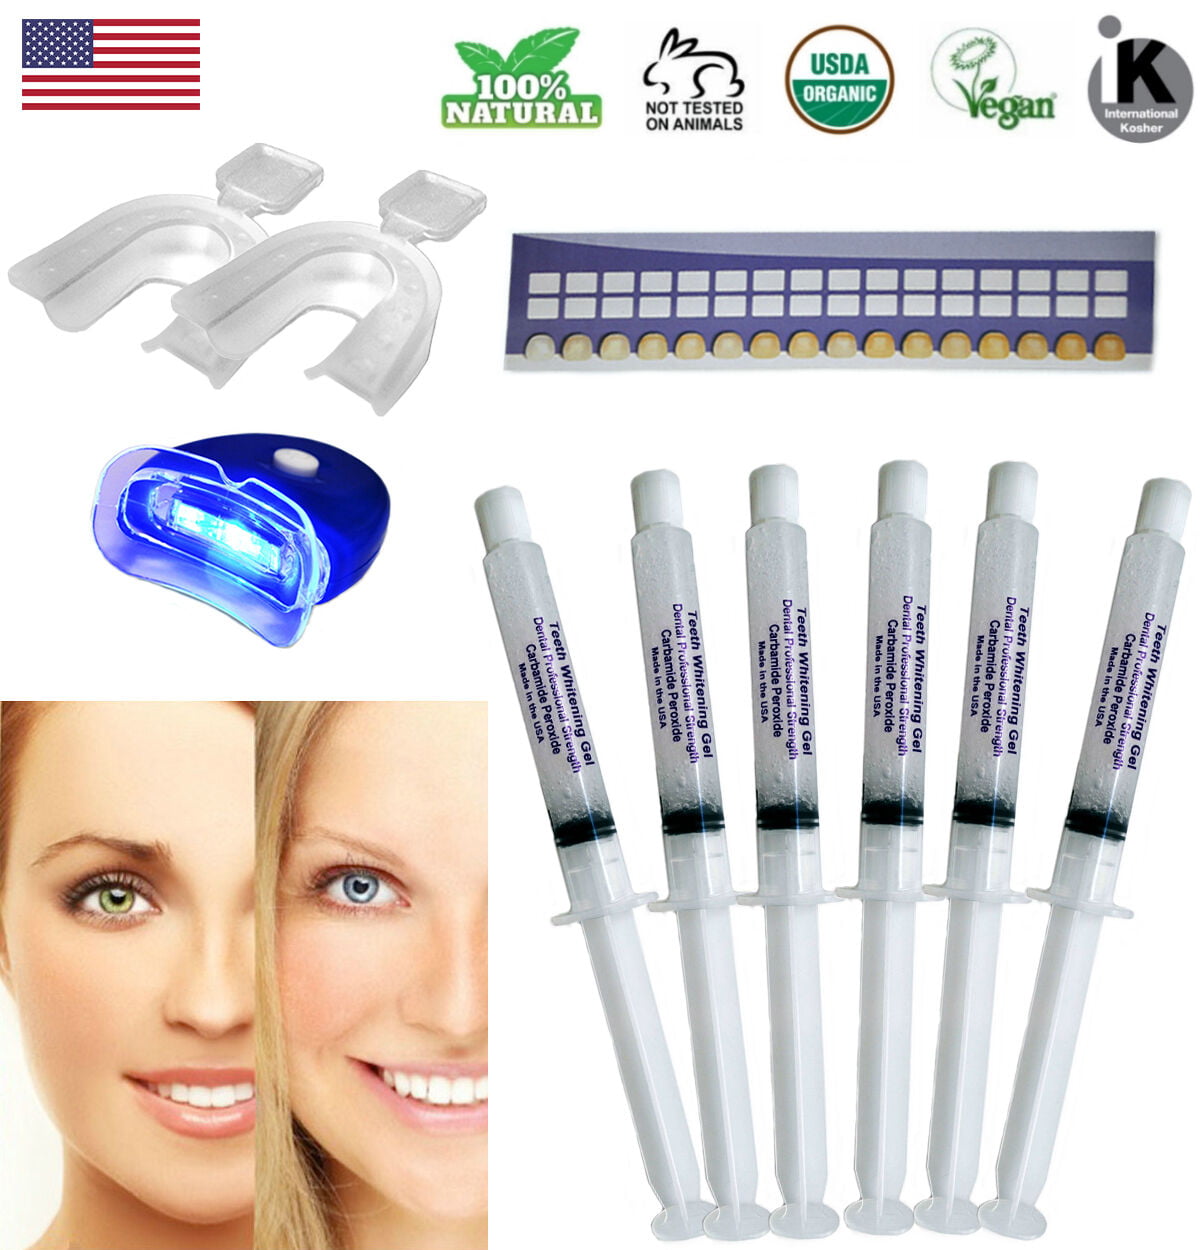 44% Peroxide Teeth Whitening Tooth Bleaching Whitener Kit ...